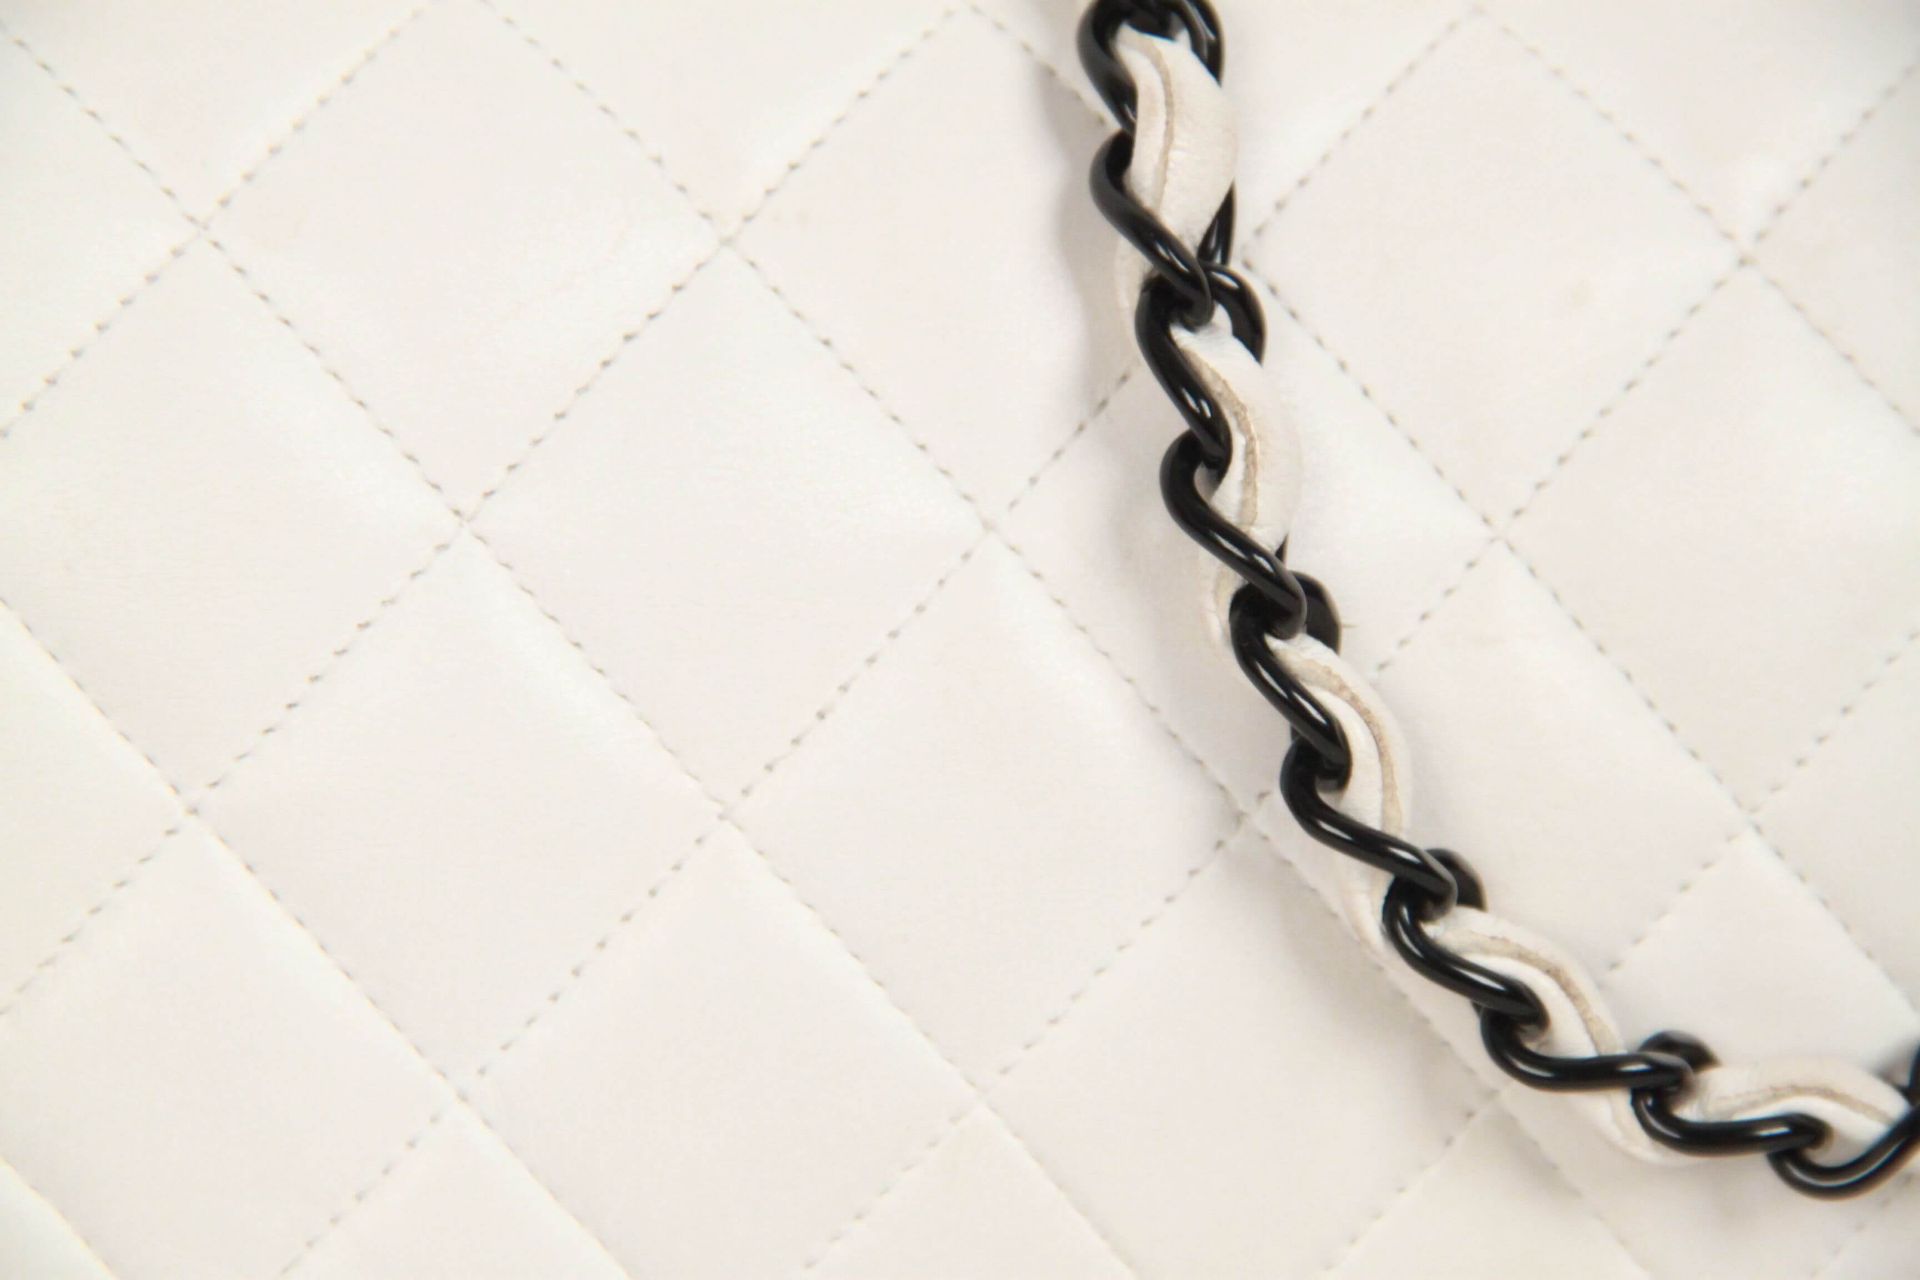 Chanel Vintage White Quilted Leather Shoulder Bag - Image 4 of 11